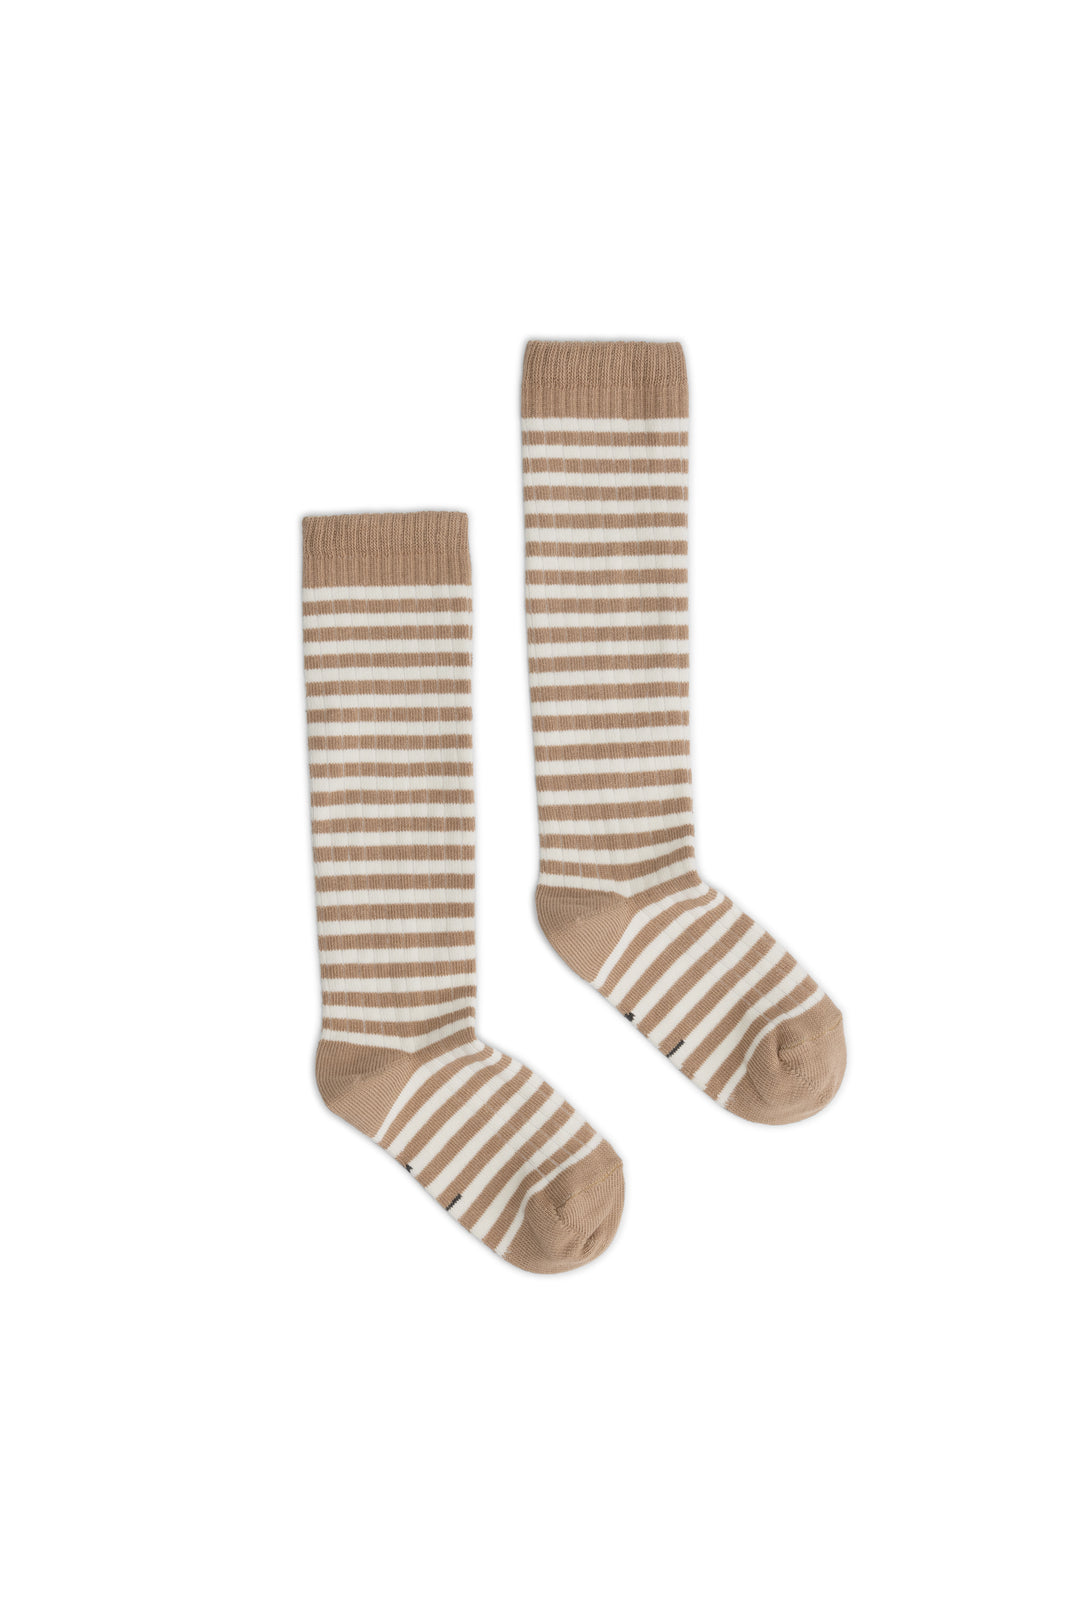 Long Ribbed Socks, Biscuit/Cream